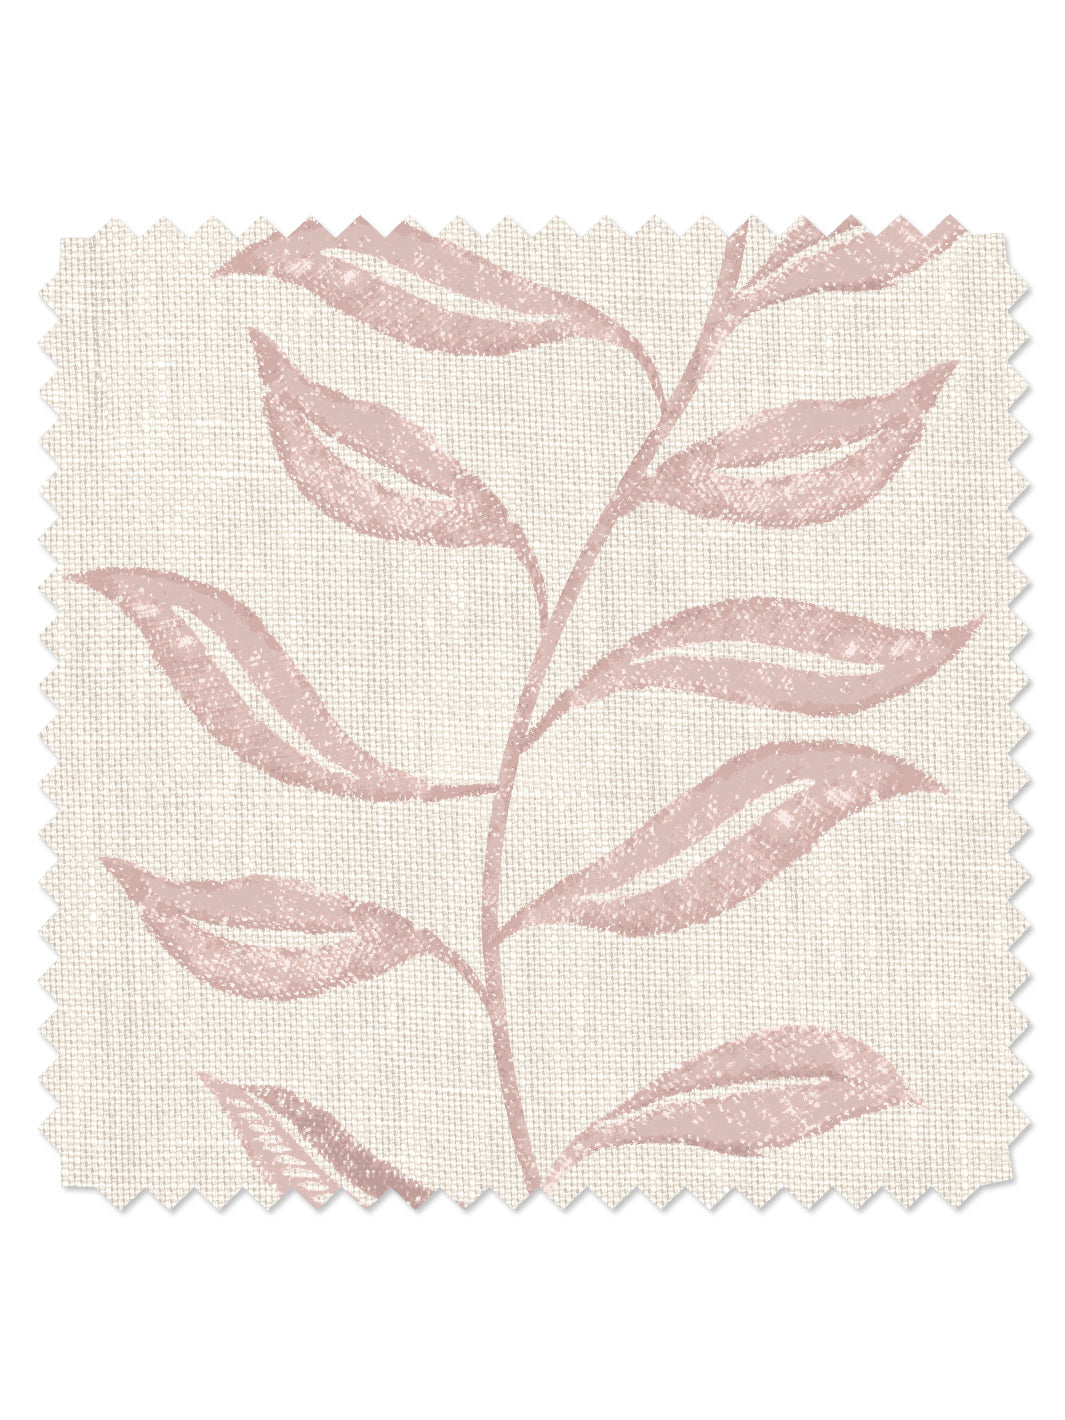 'Seneca' Linen Fabric by Nathan Turner - Pink